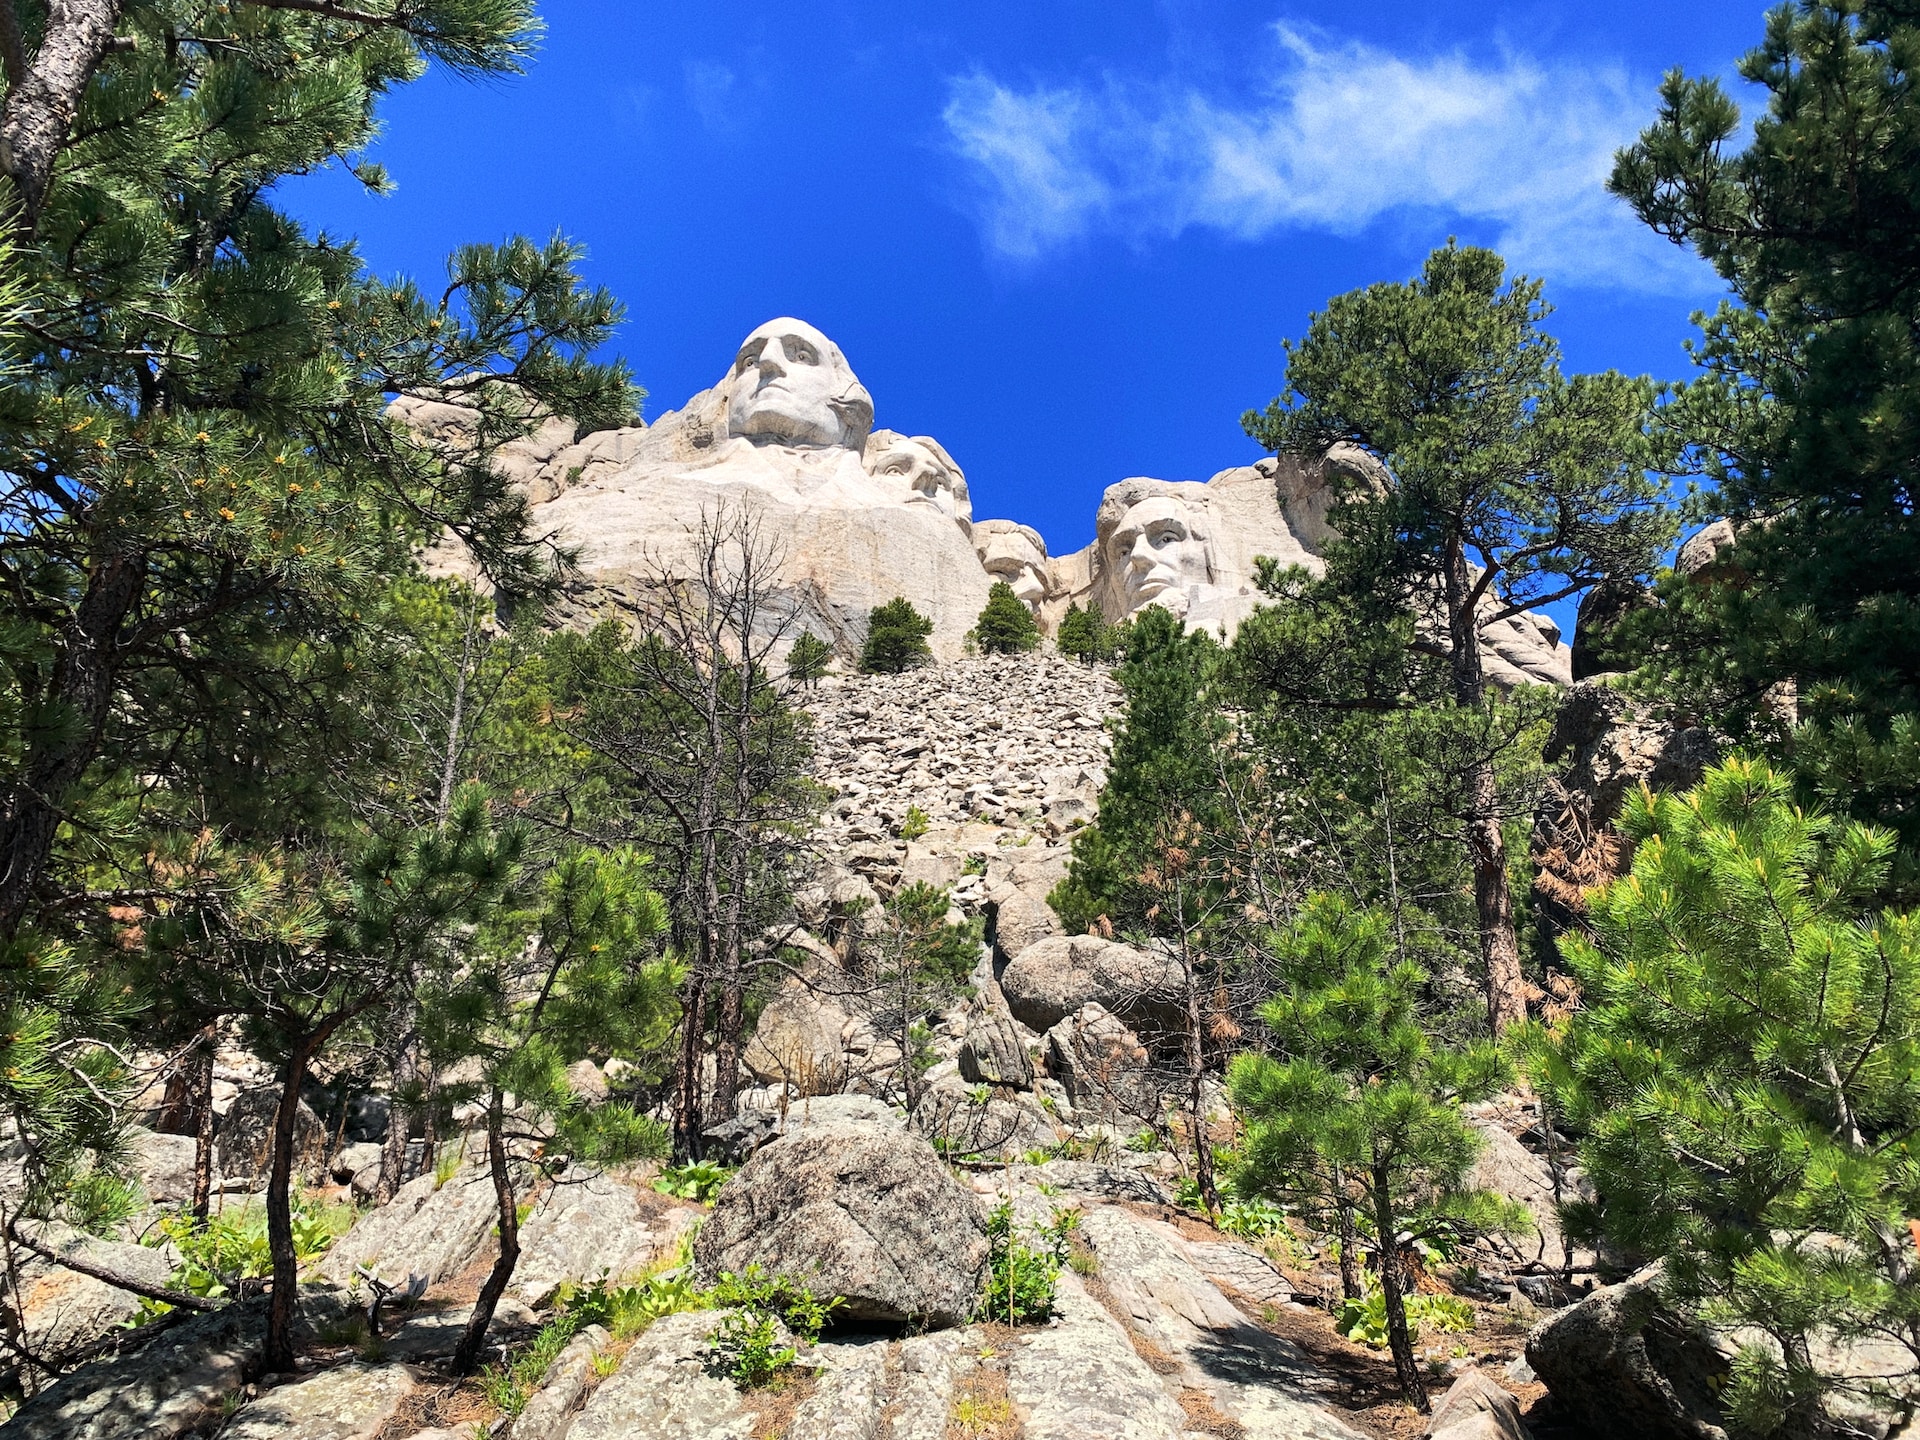 Rushmore in the Black Hills region of South Dakota